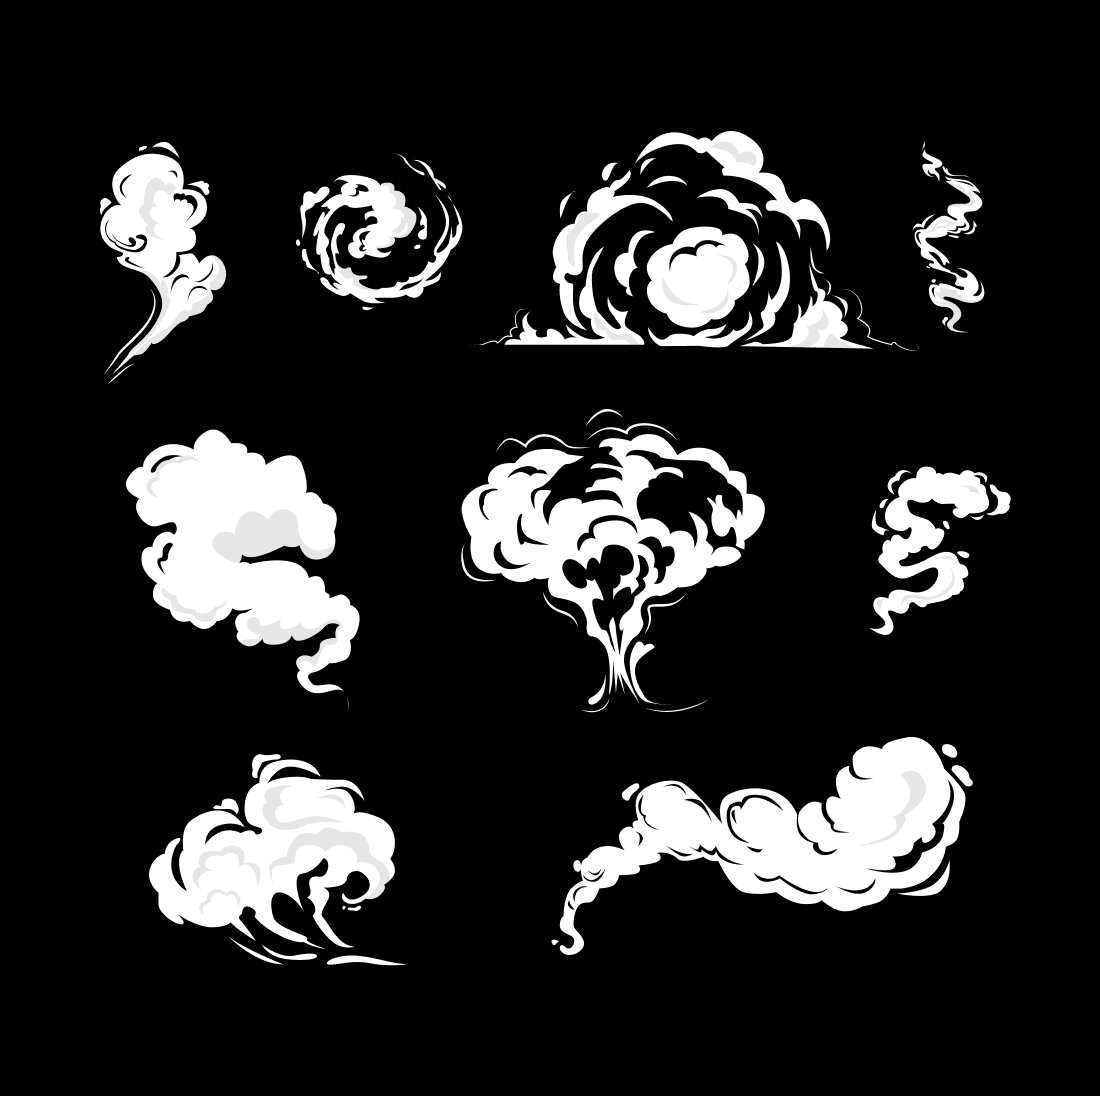 Smoke Cloud SVG cover.